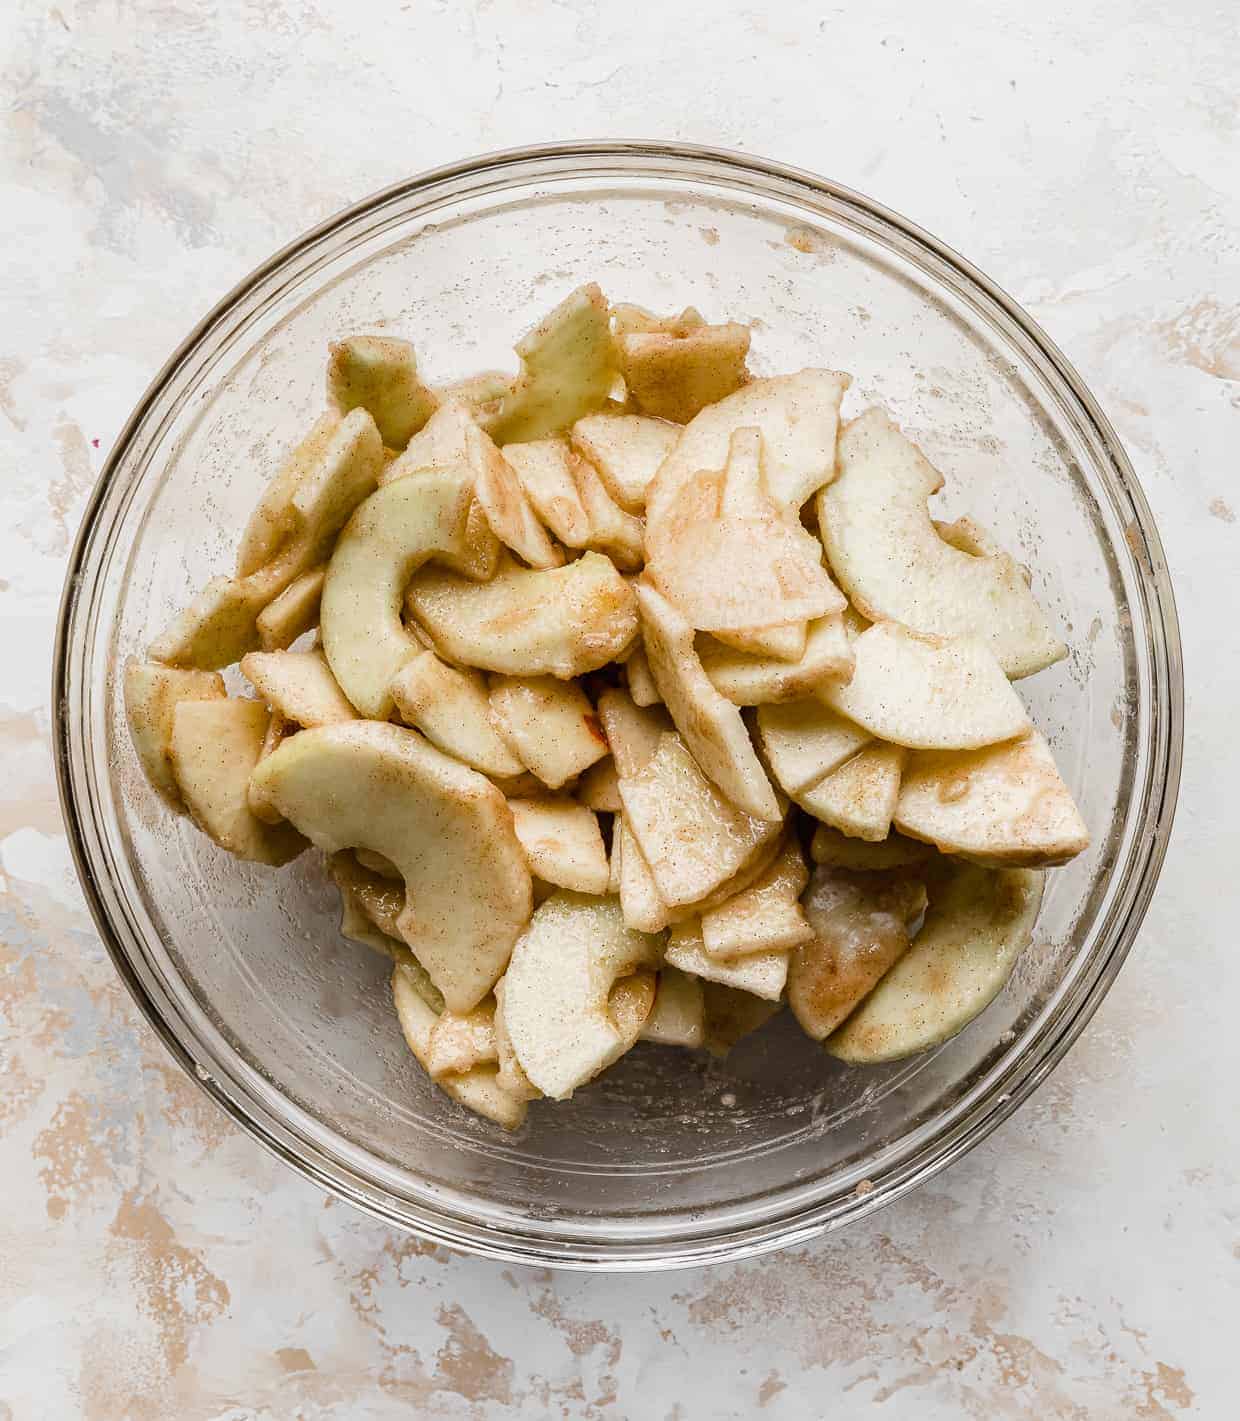 Cinnamon sugar topped sliced apples in a glass bowl for making Easy Apple Crisp.